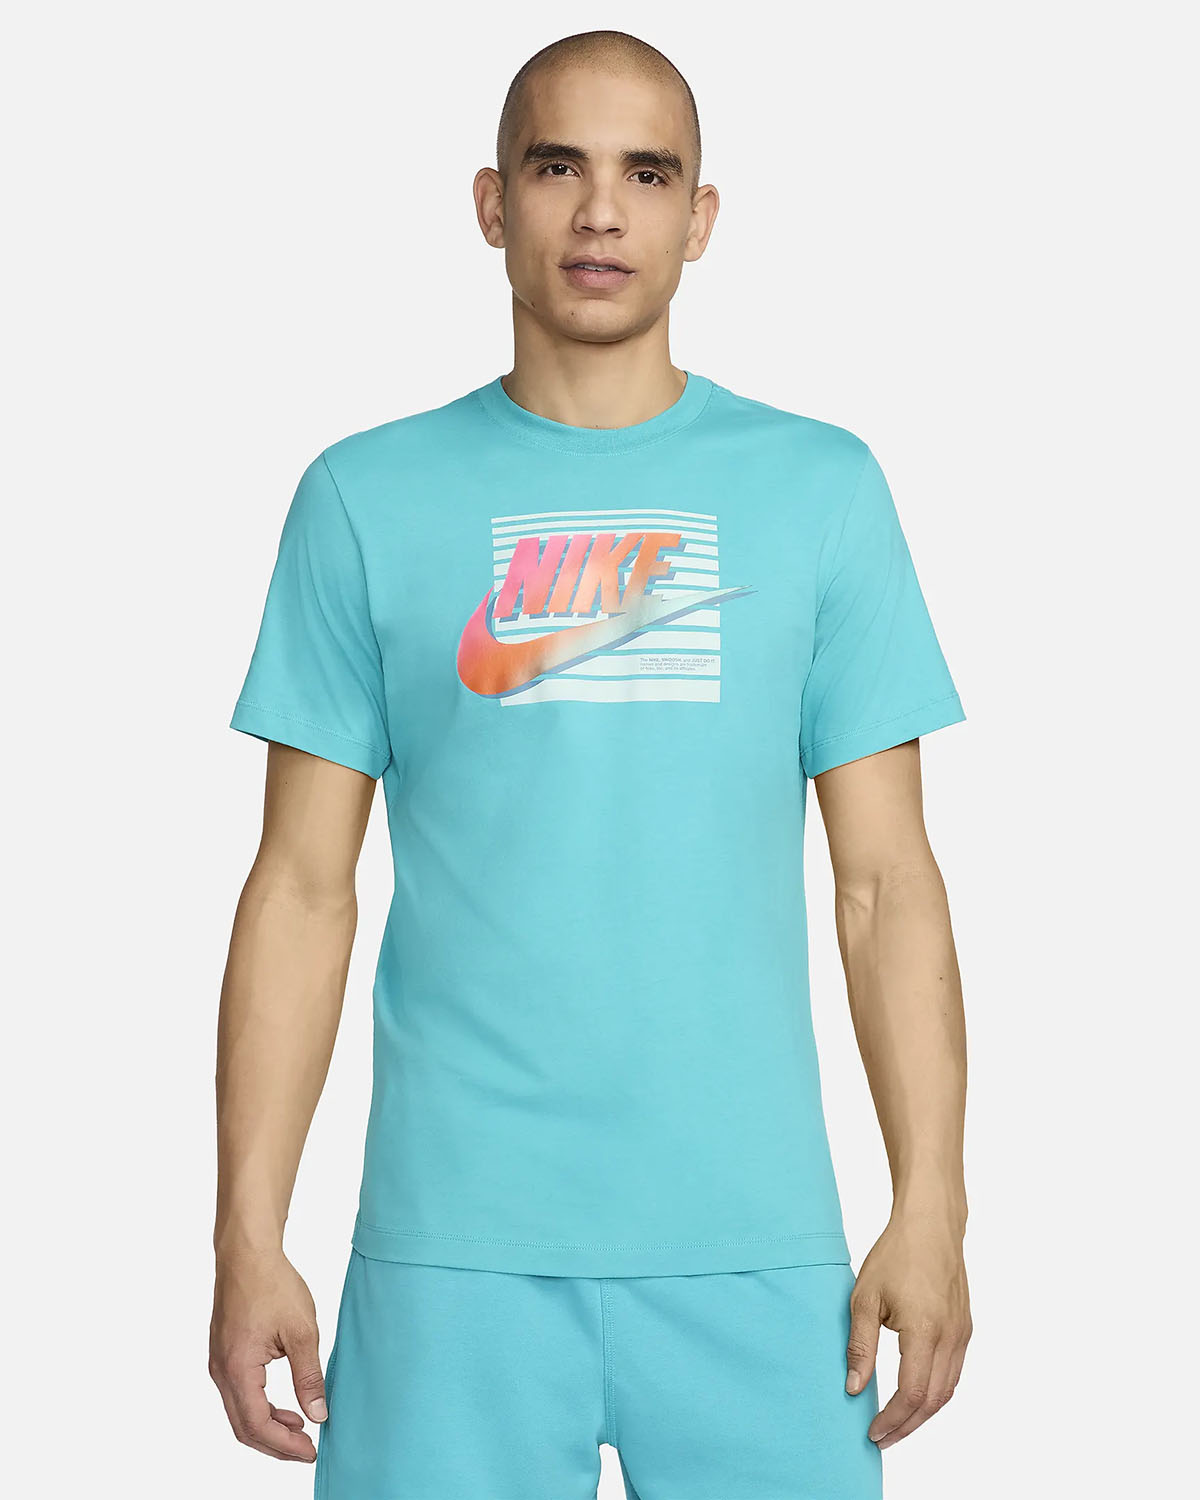 Nike Sportswear Graphic T Shirt Dusty Cactus Orange Pink 1